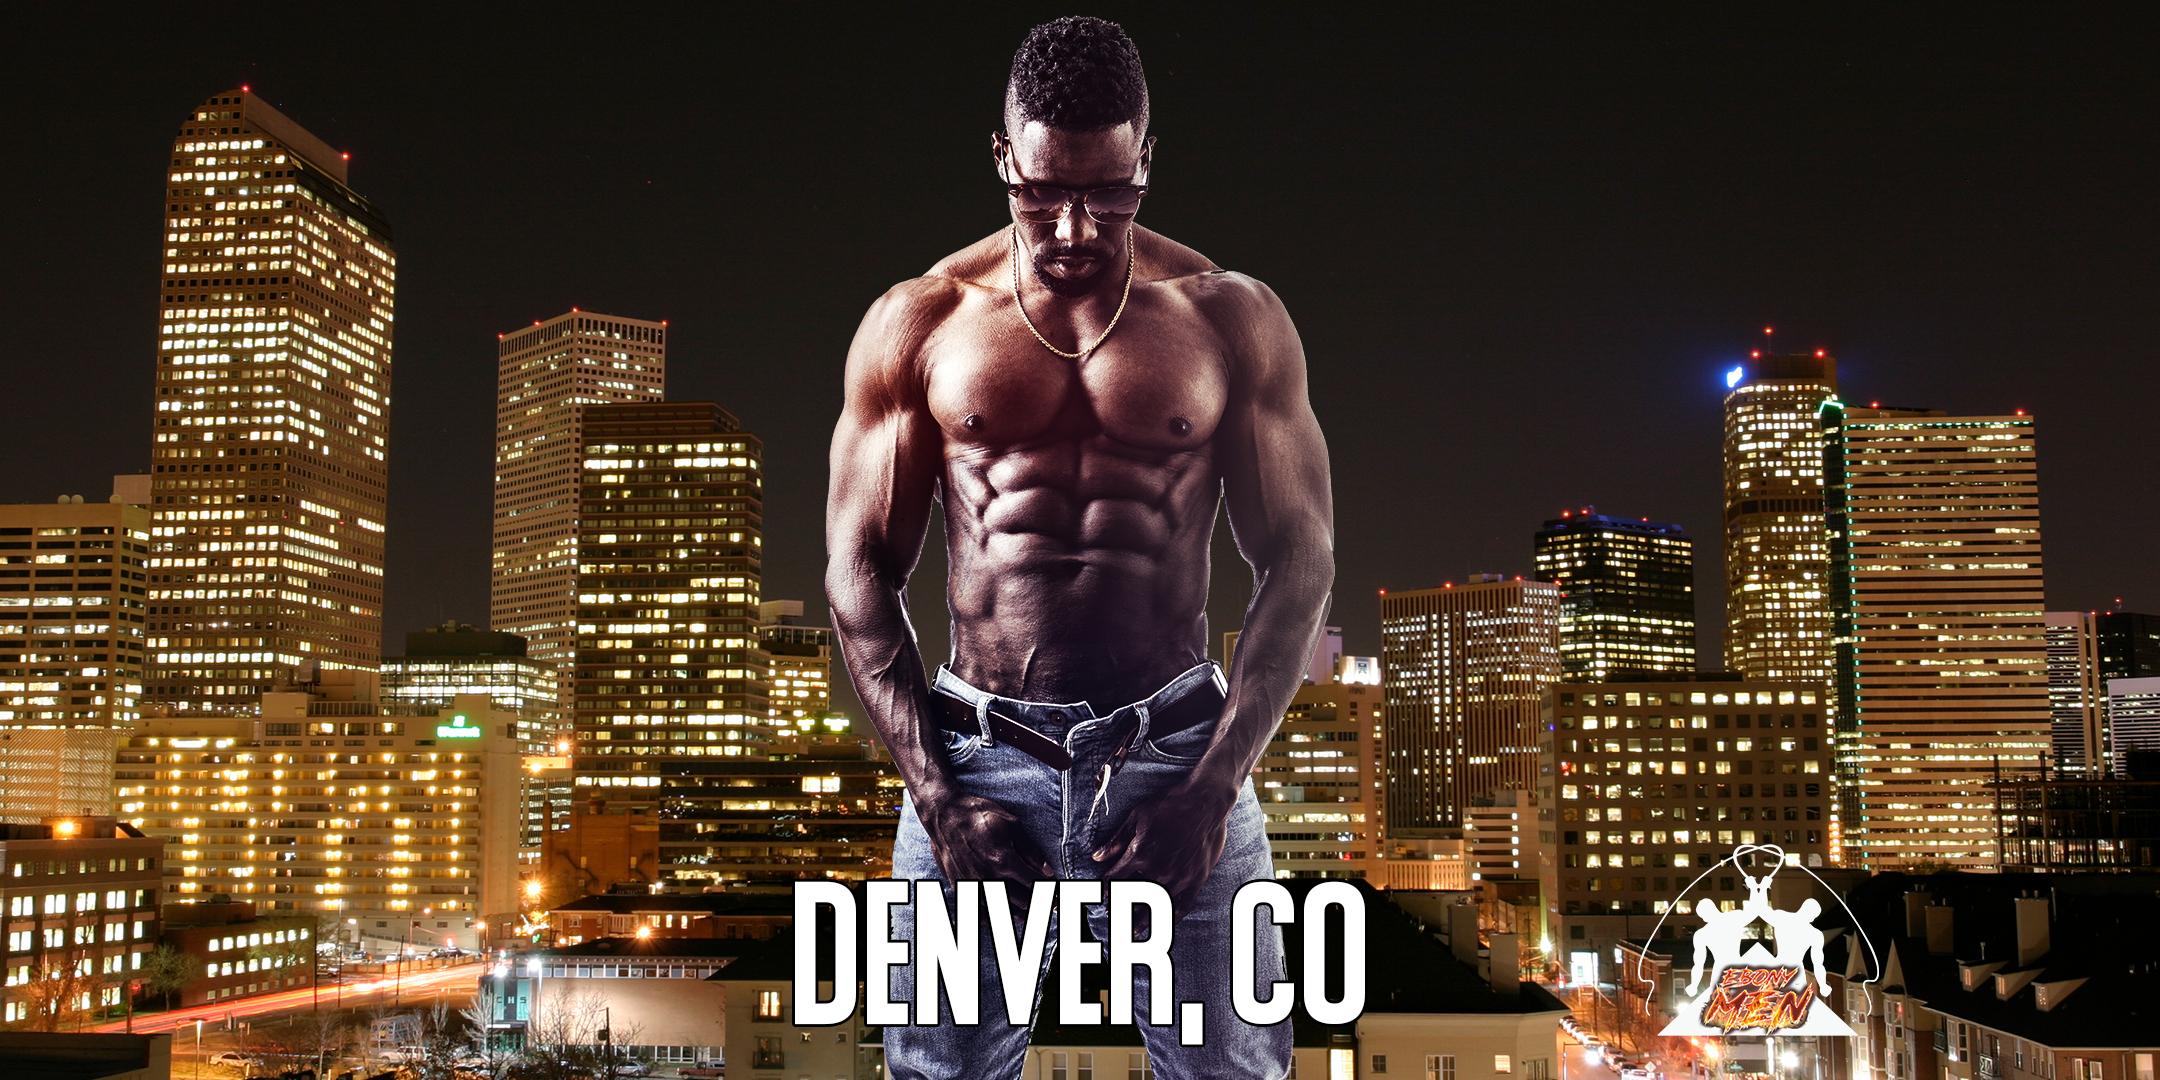 Ebony Men Black Male Revue Strip Clubs & Black Male Strippers Denver, CO 8-10PM